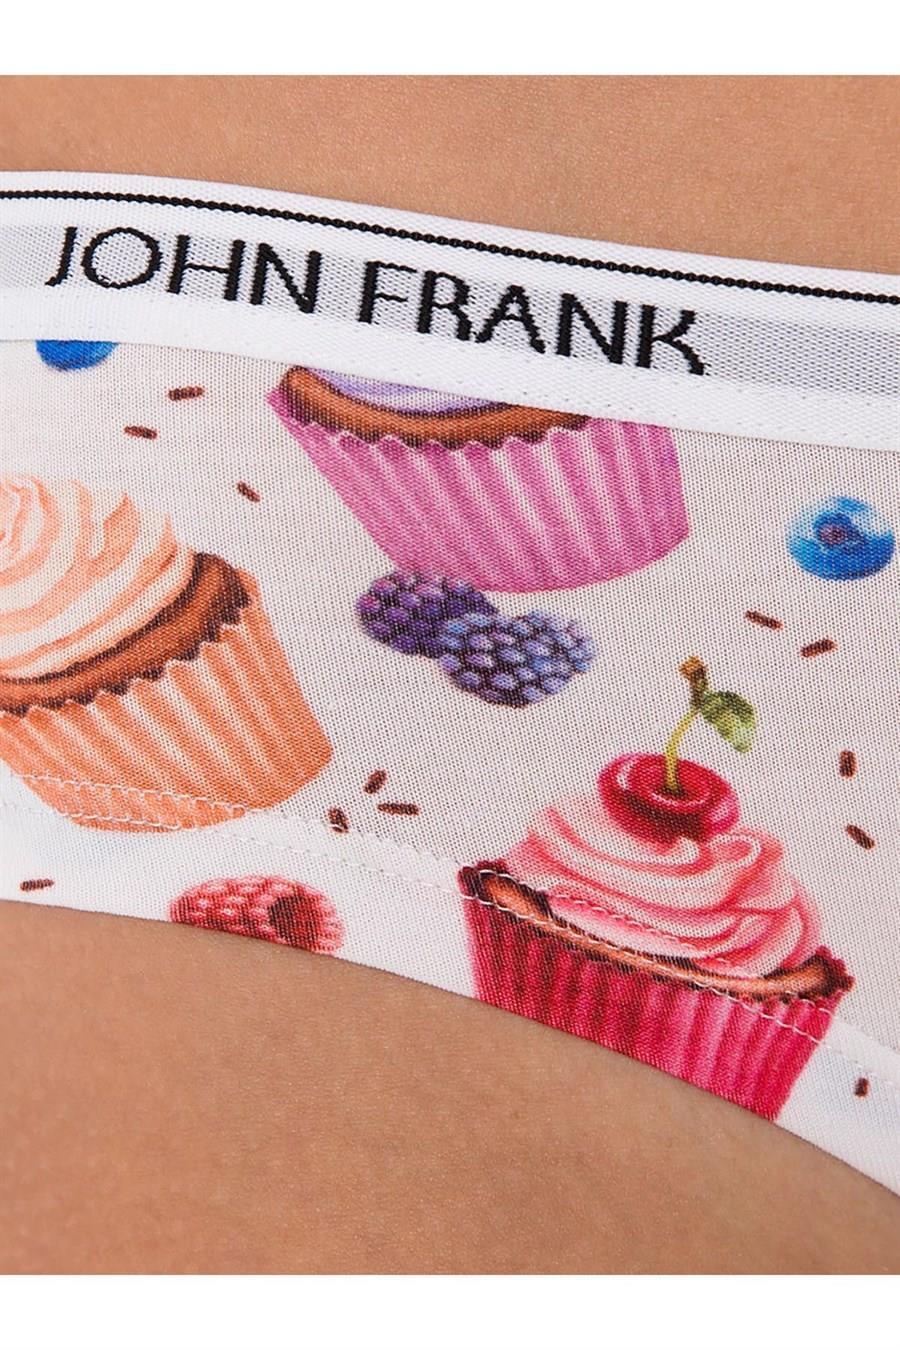 John Frank Identity Womens Hipster-Berrycake - STREET MODE ™